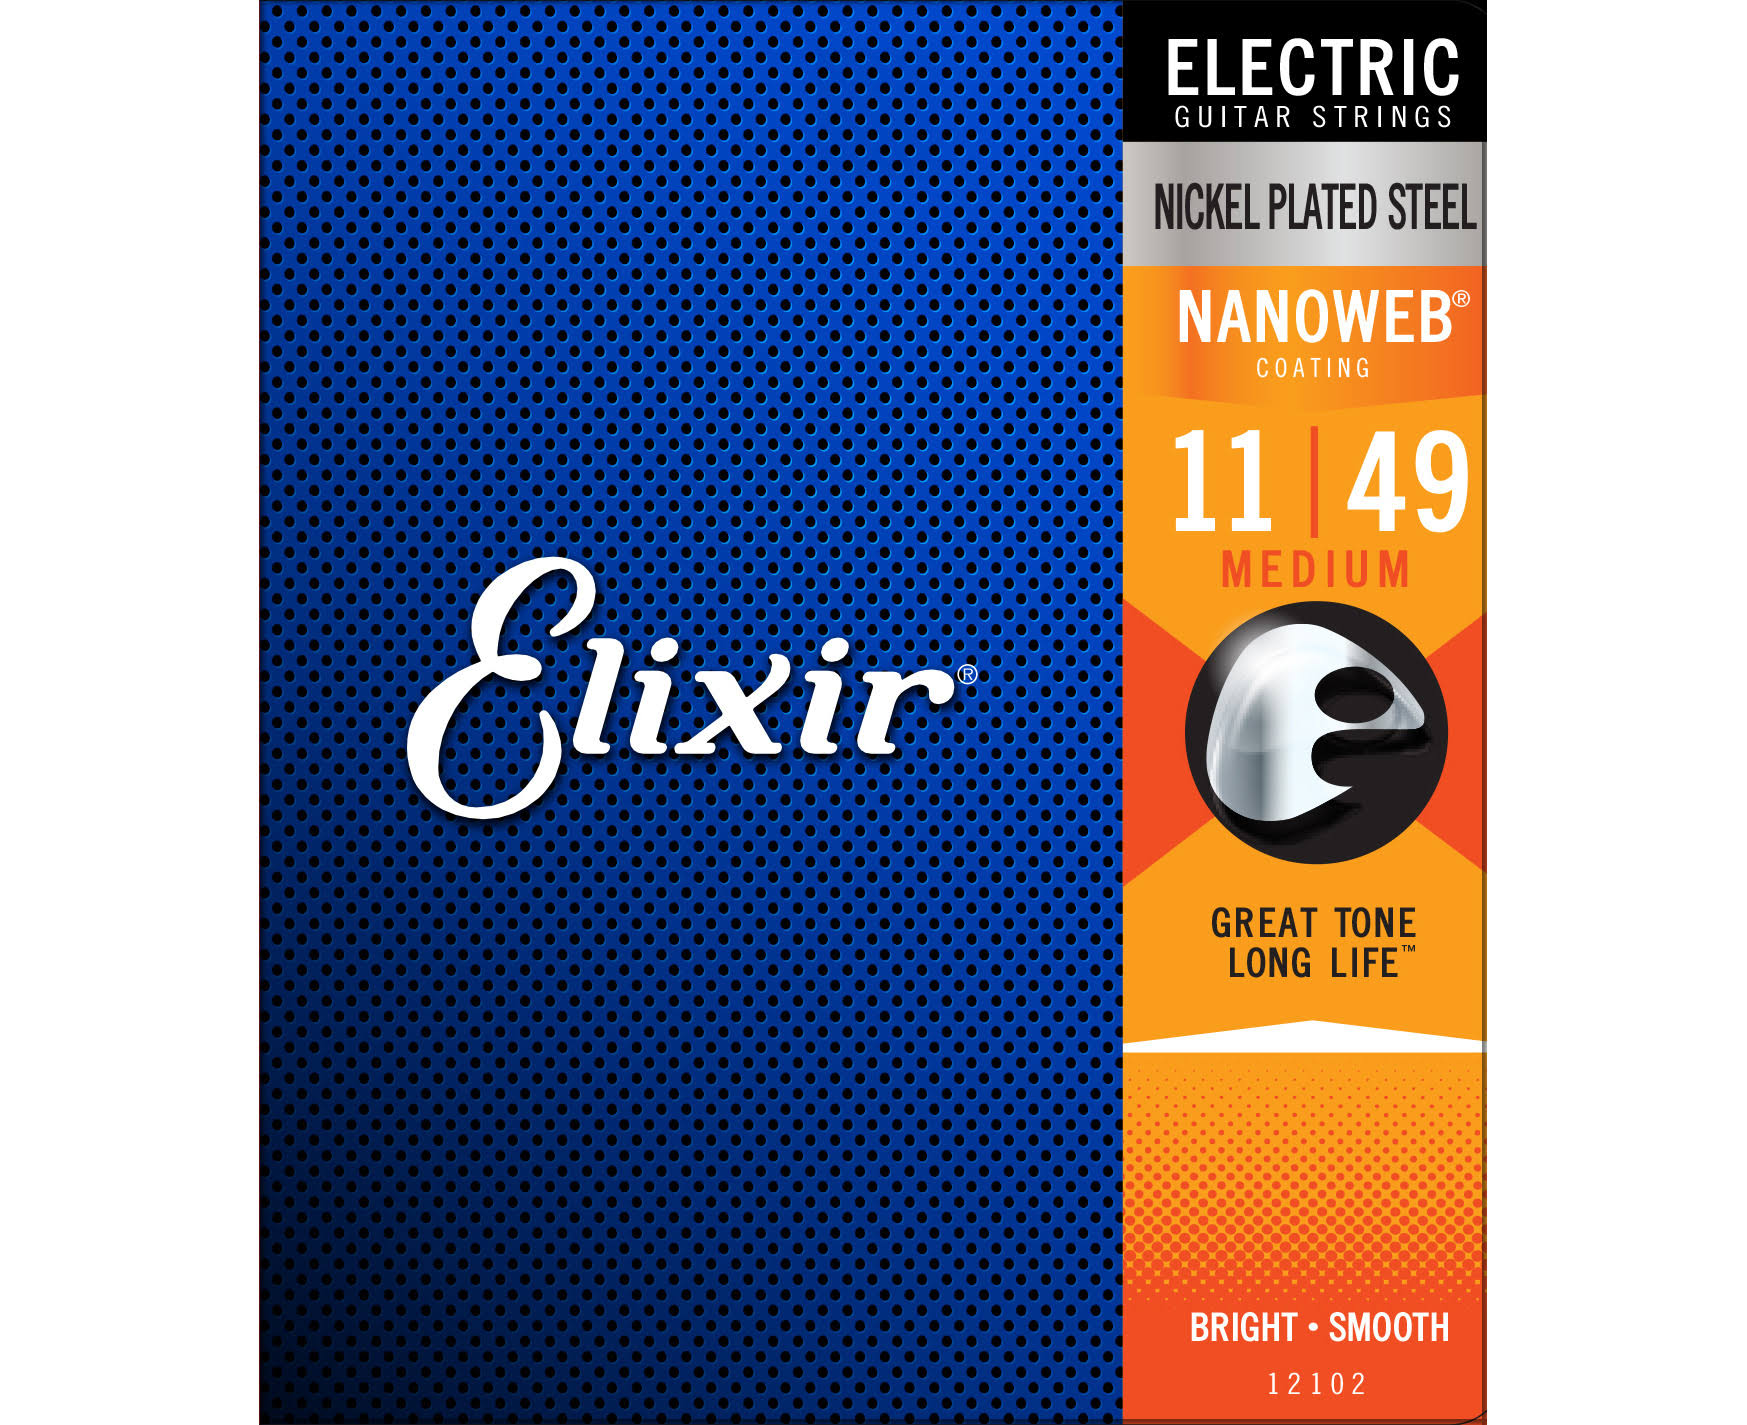 Elixir Nanoweb Electric Guitar Strings - Medium, .011-.049